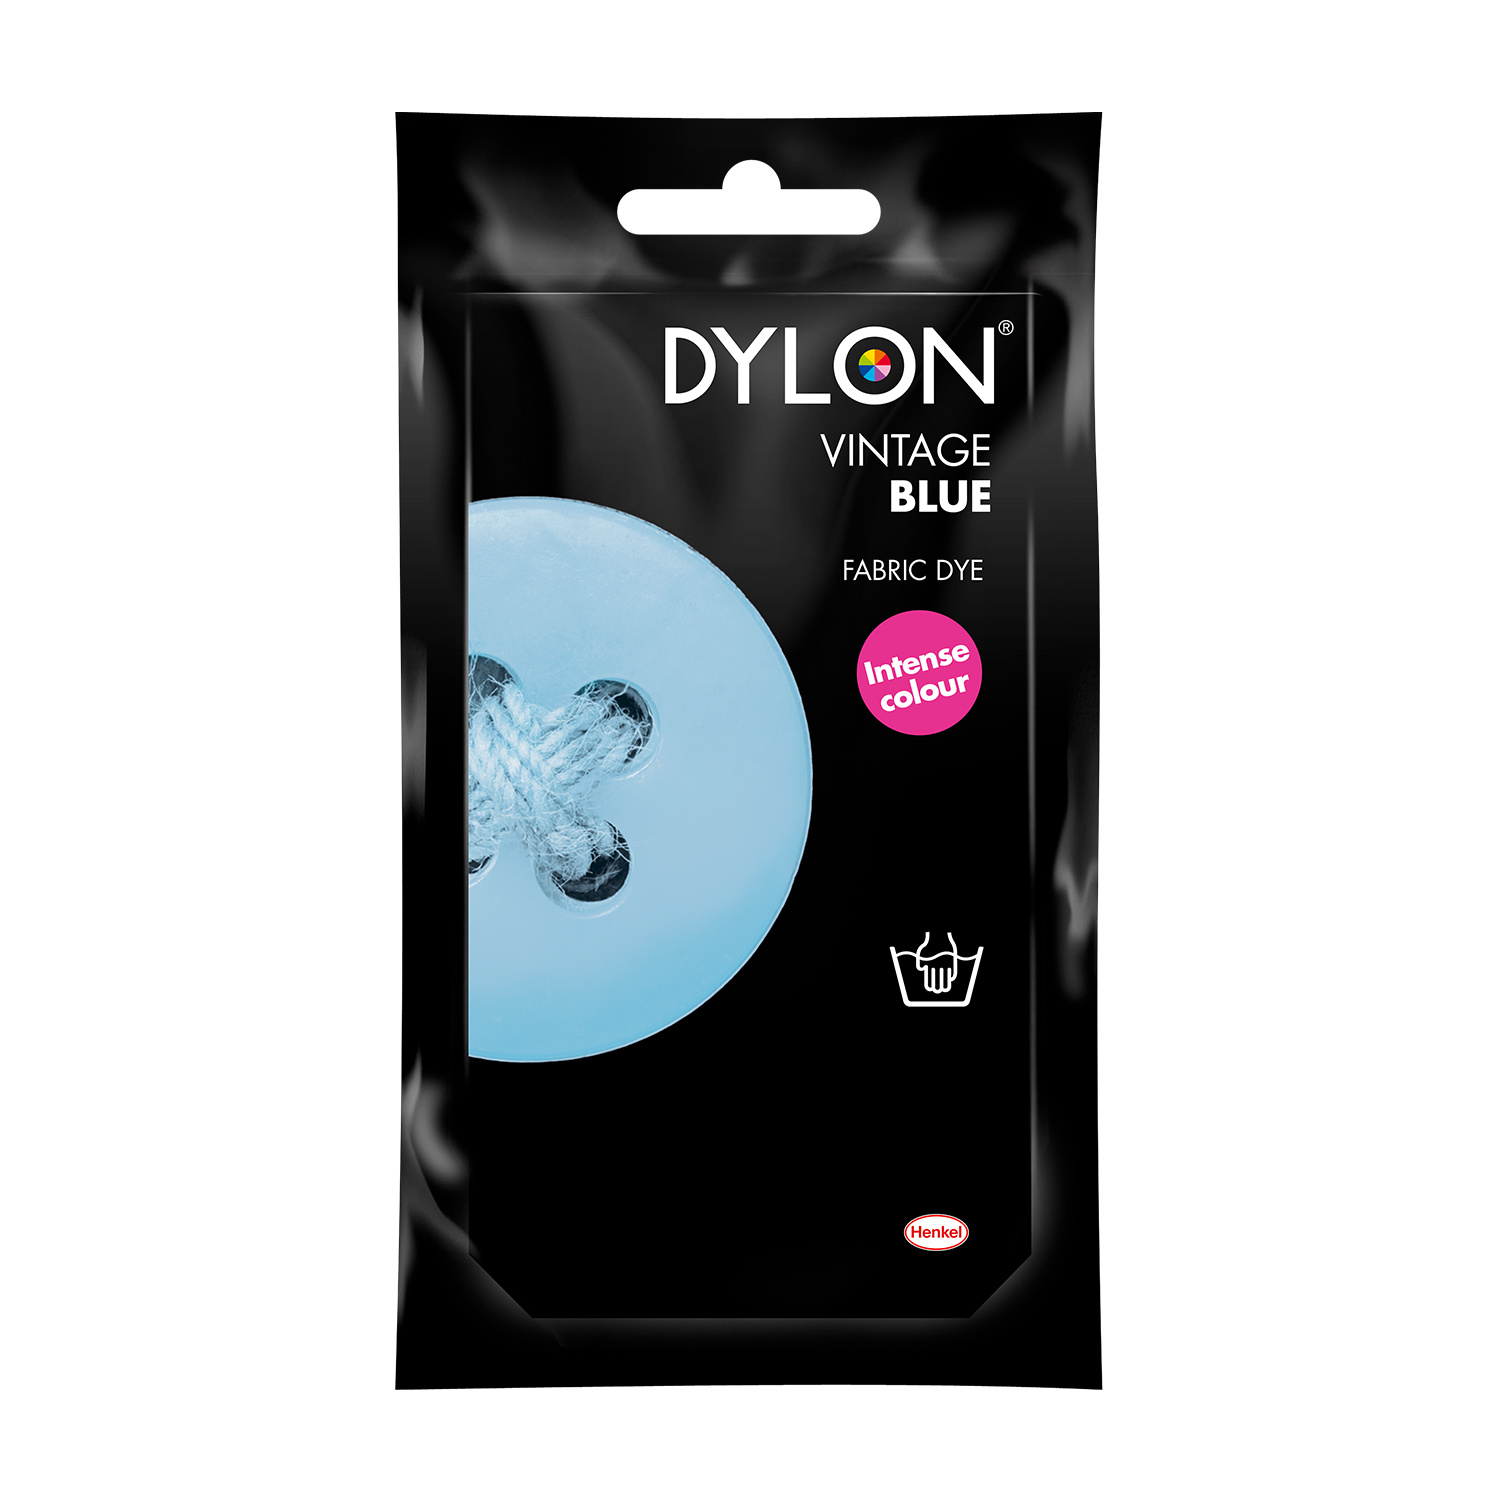 Dylon Hand Fabric Dye - Vintage Blue Image